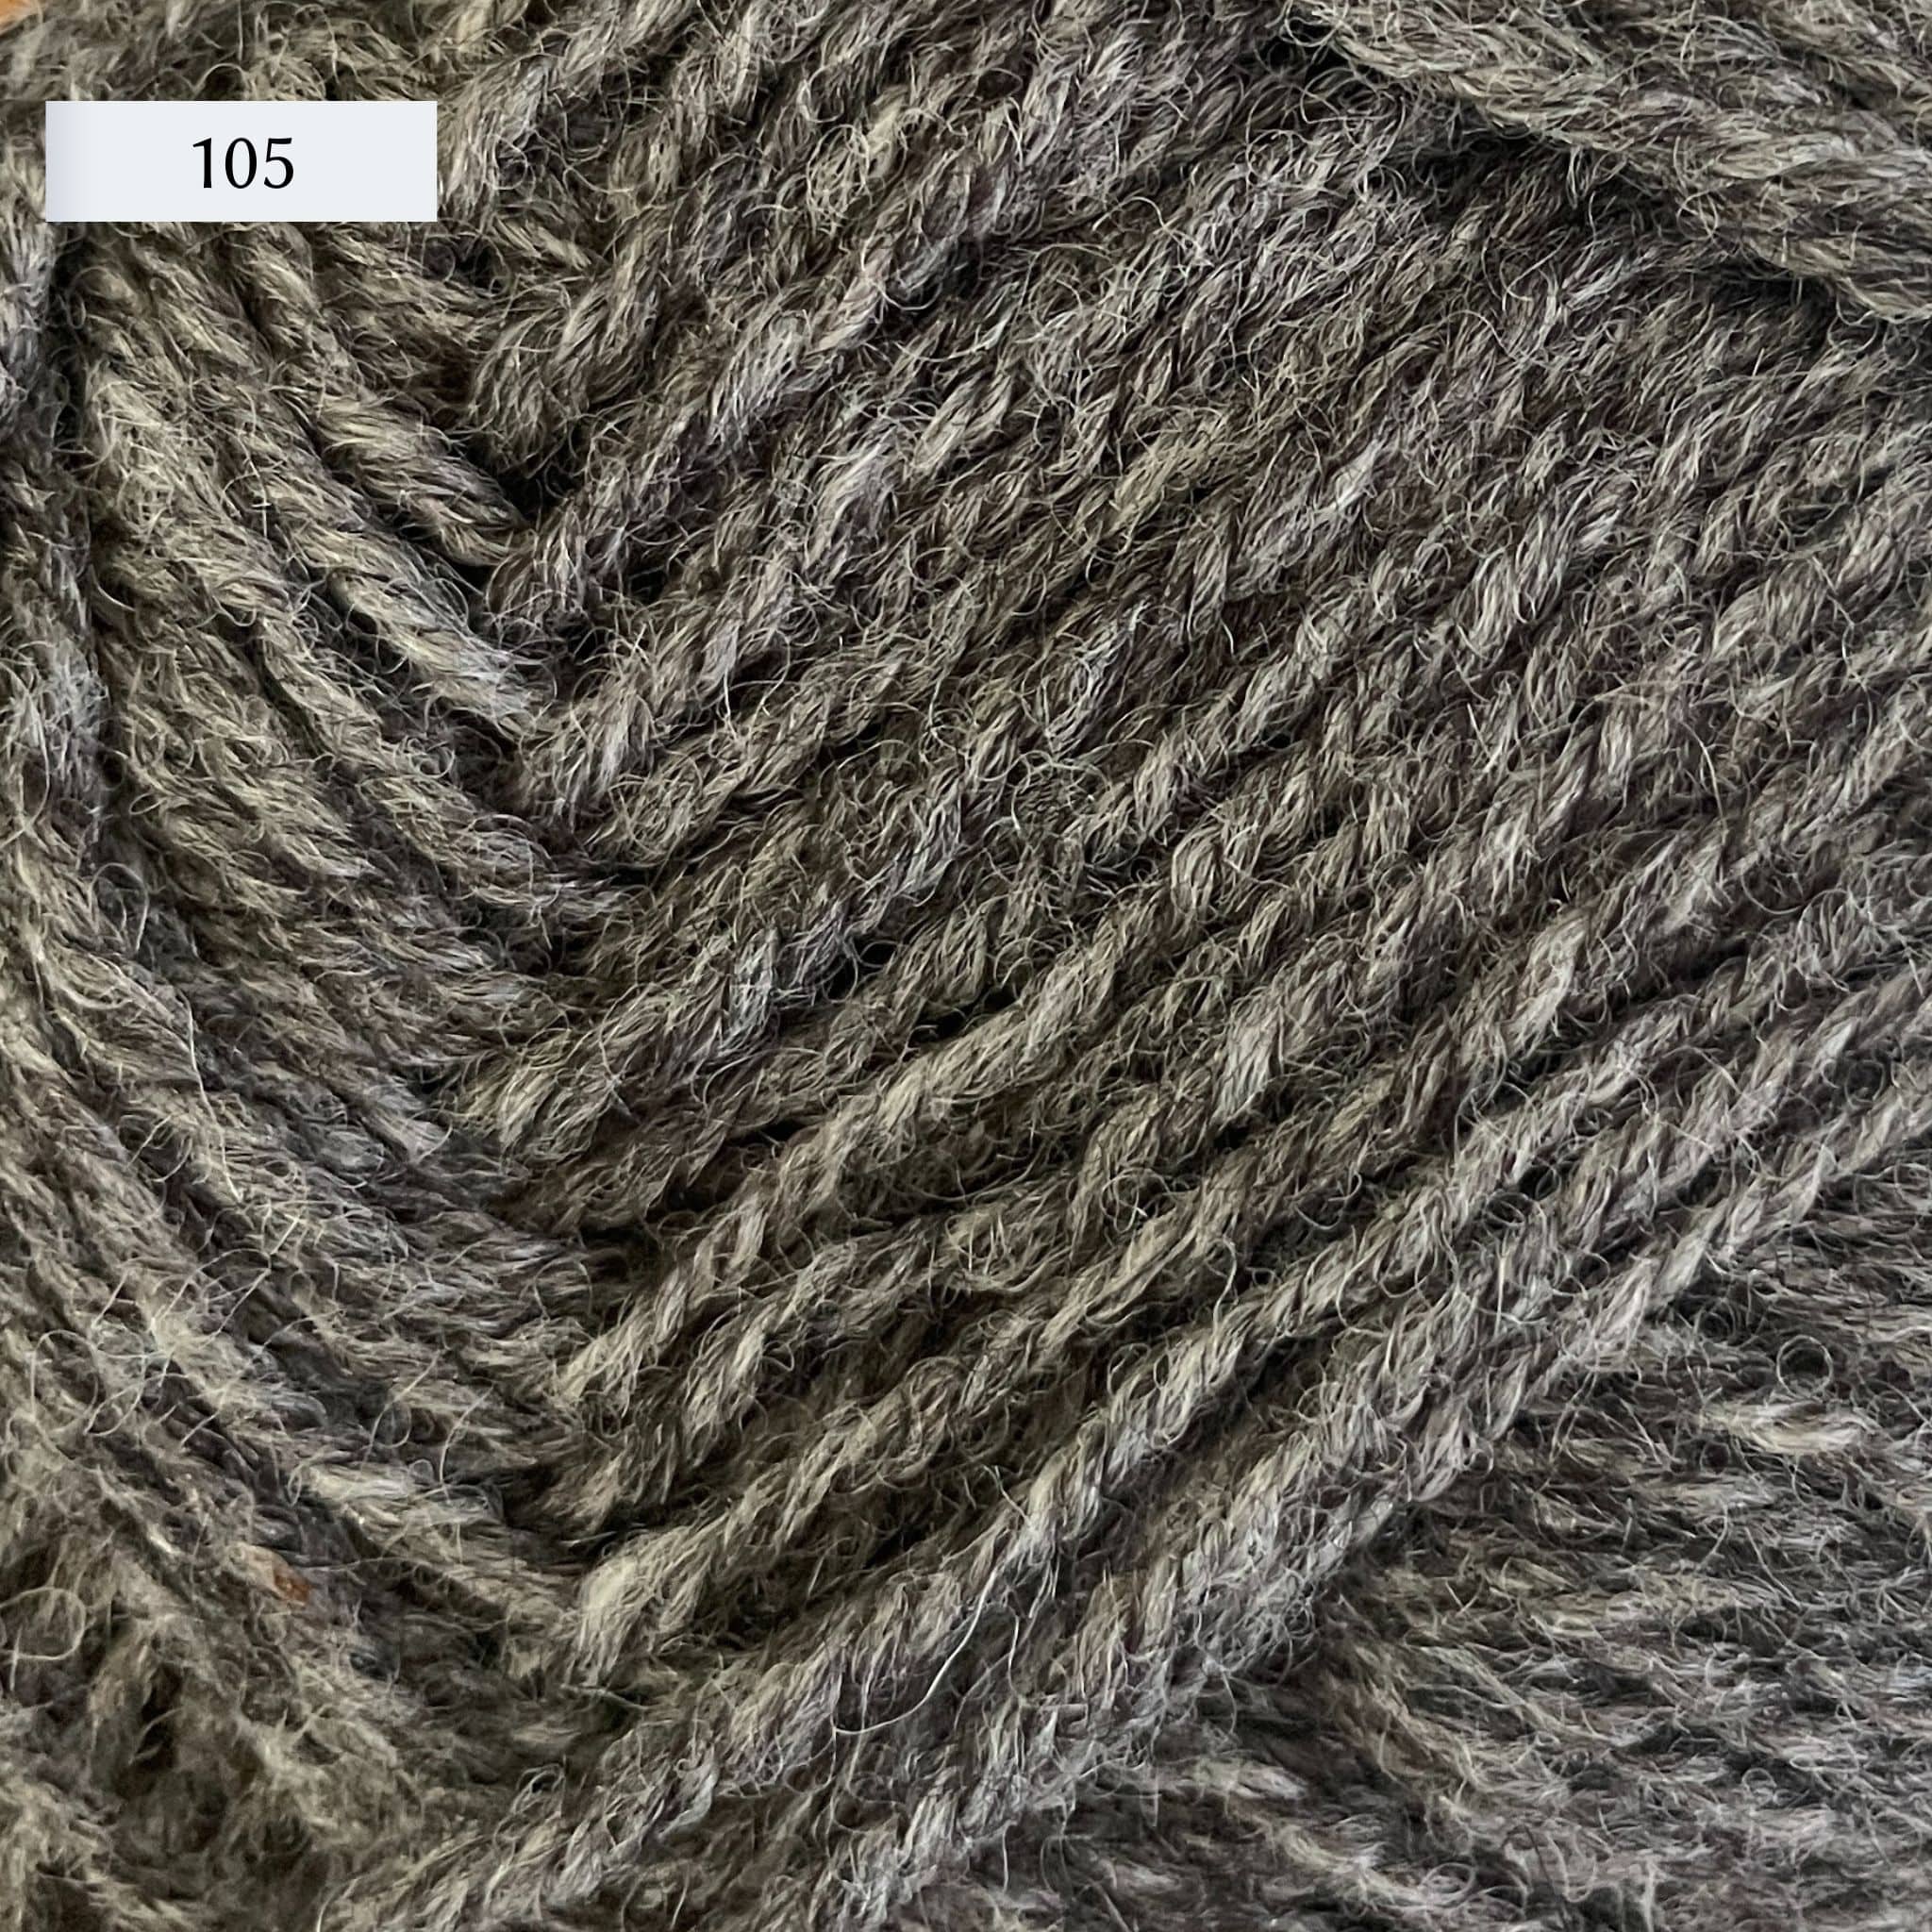 Rauma Strikkegarn, DK weight yarn, in color 105, heathered mid-tone grey